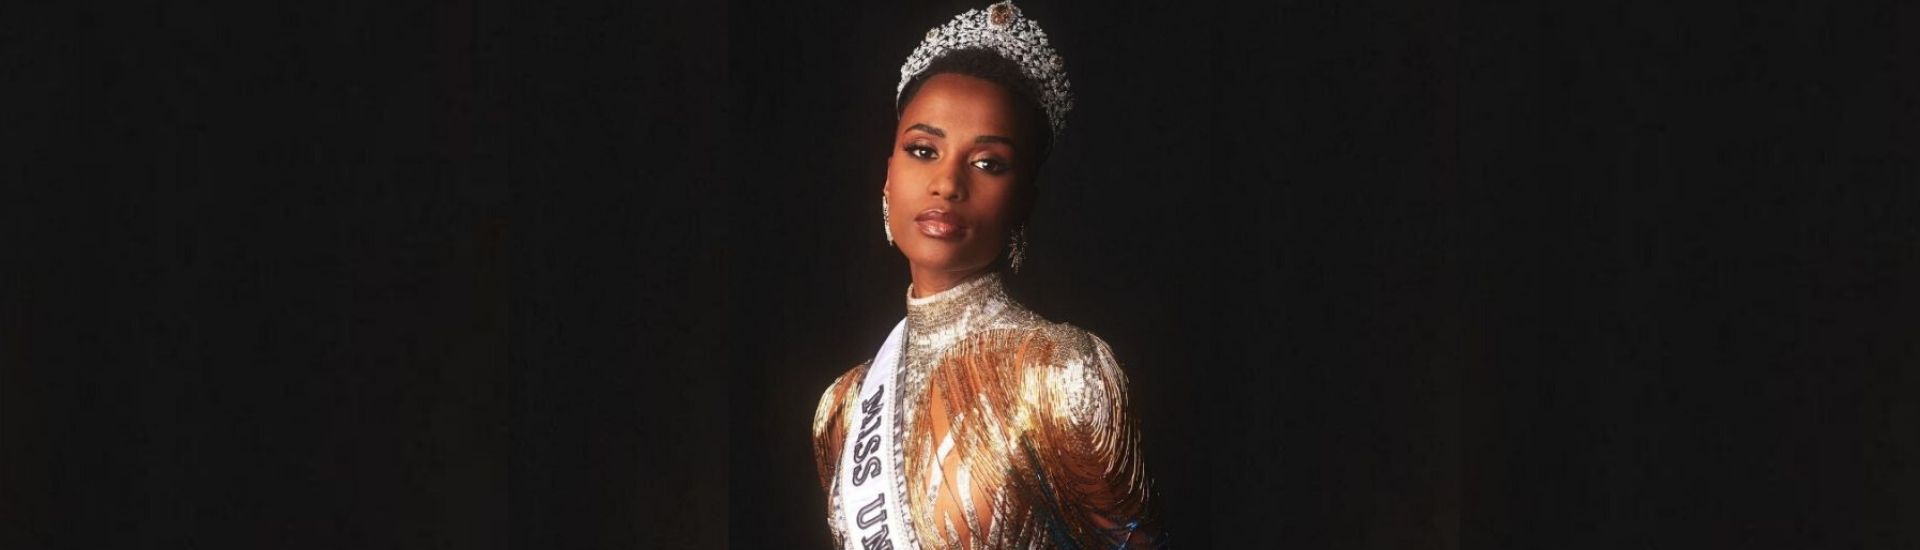 Zozibini Tunzi, 26 ans, Sud-africaine, Miss Univers 2019